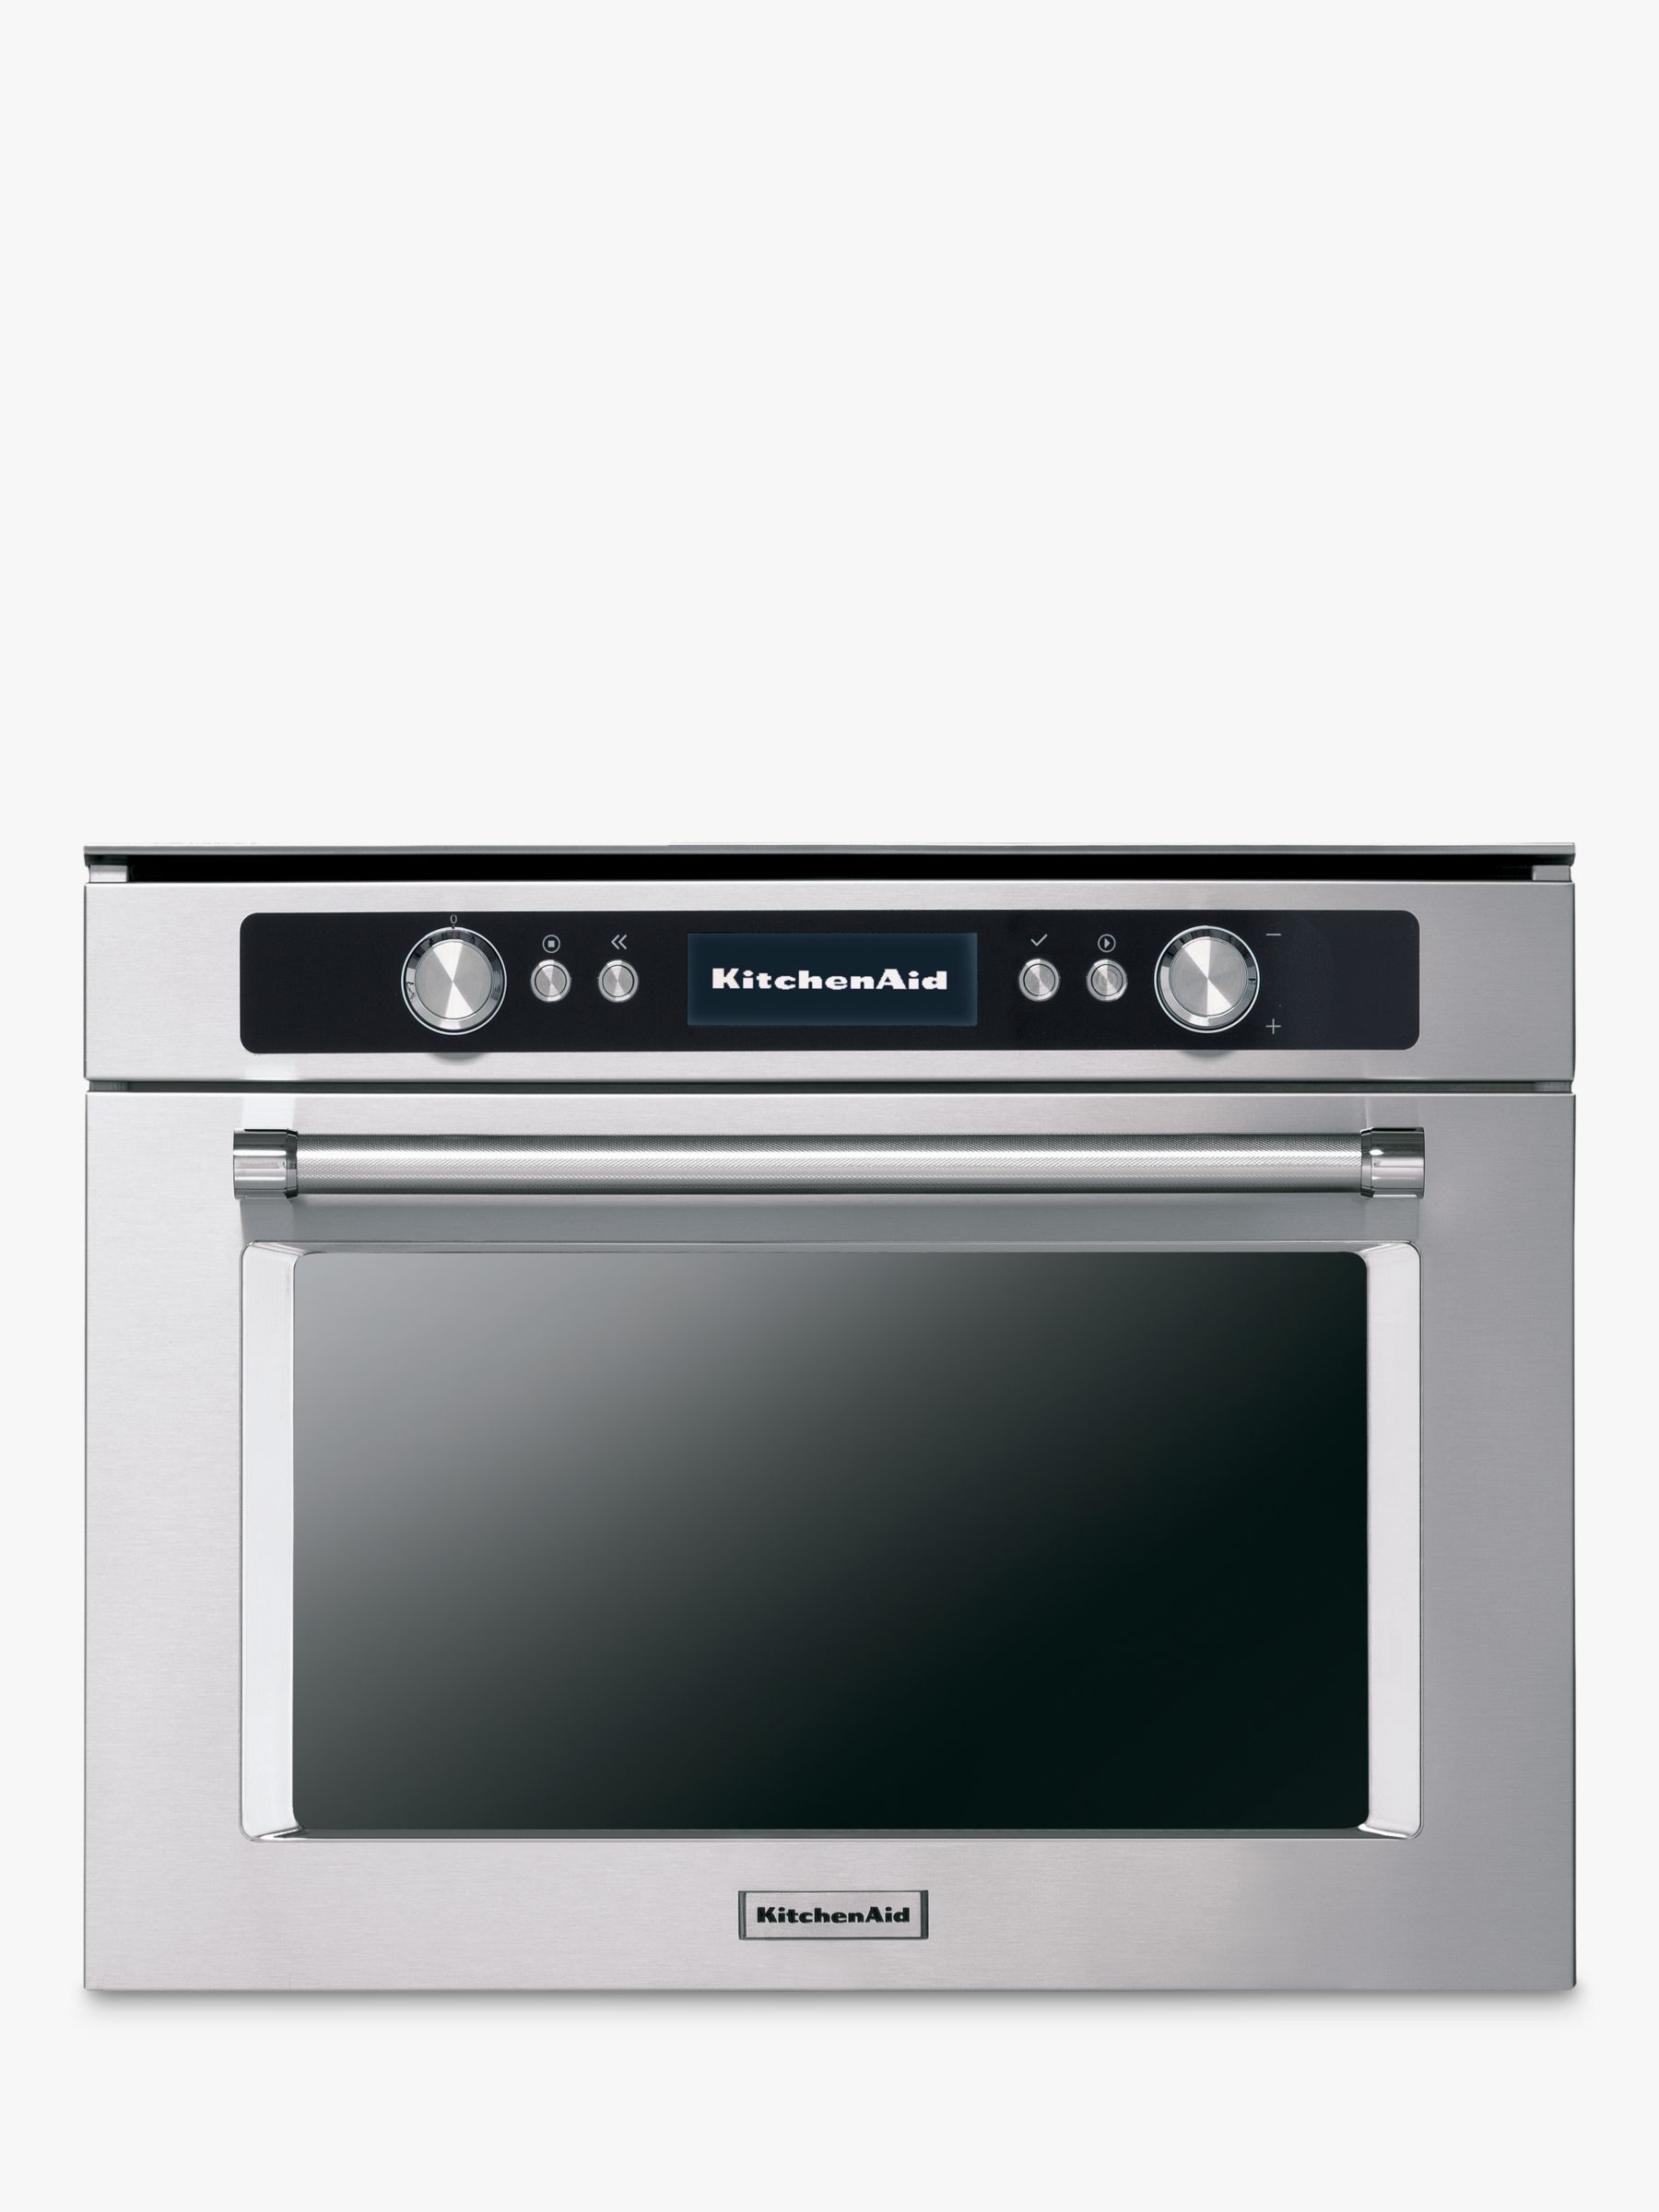 KitchenAid KOQCX45600 Built-In Multifunction Single Oven, Stainless Steel